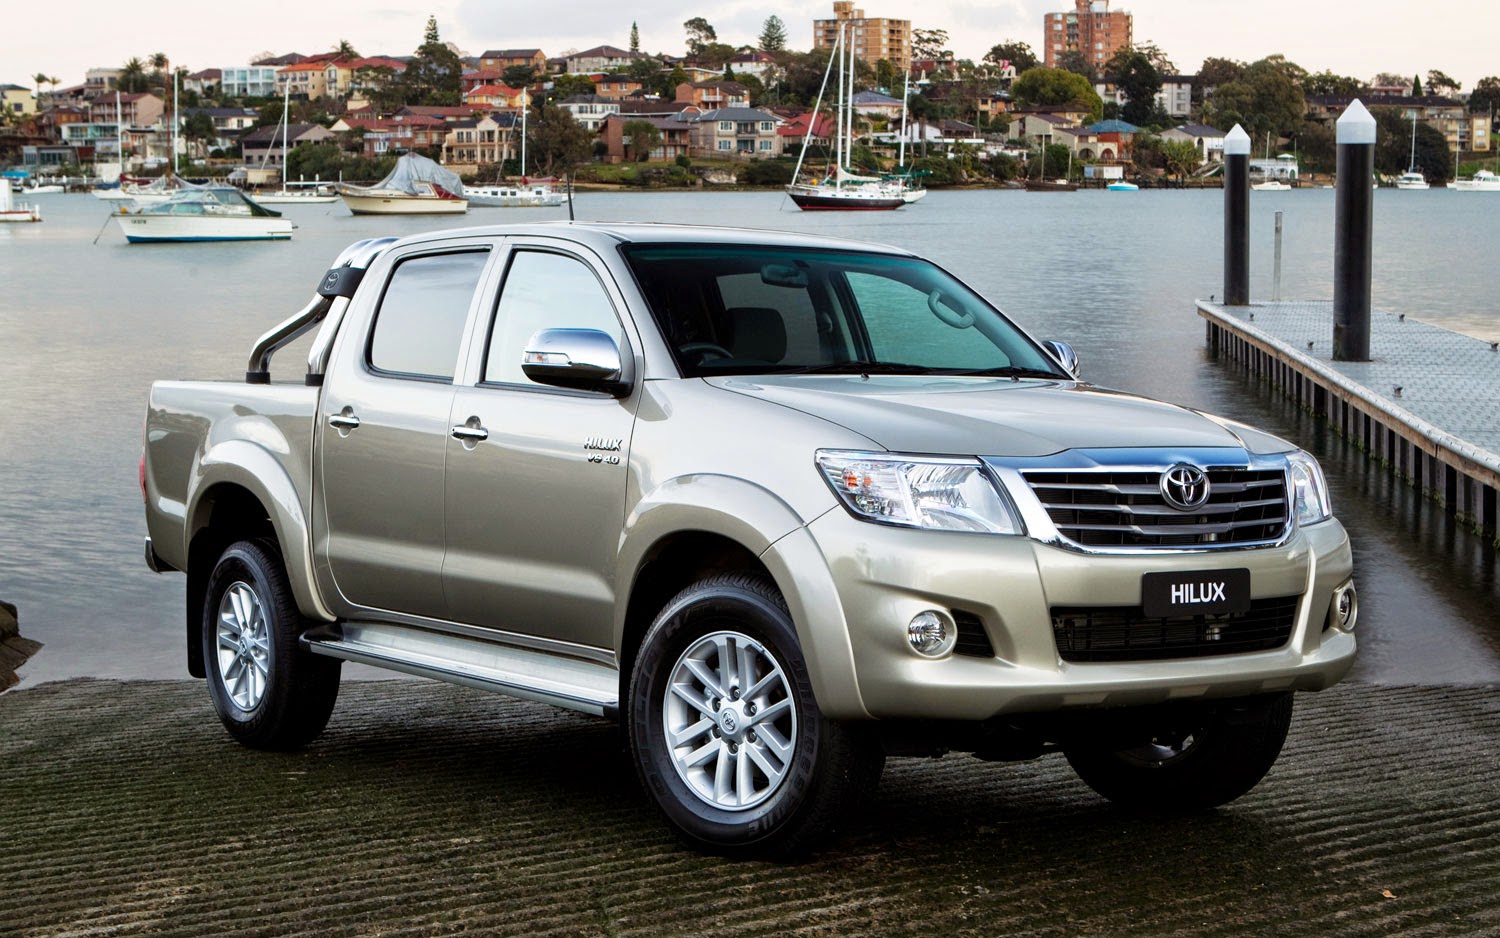 Daftar Harga Toyota Hilux Terbaru 2015 Raja Otomotif